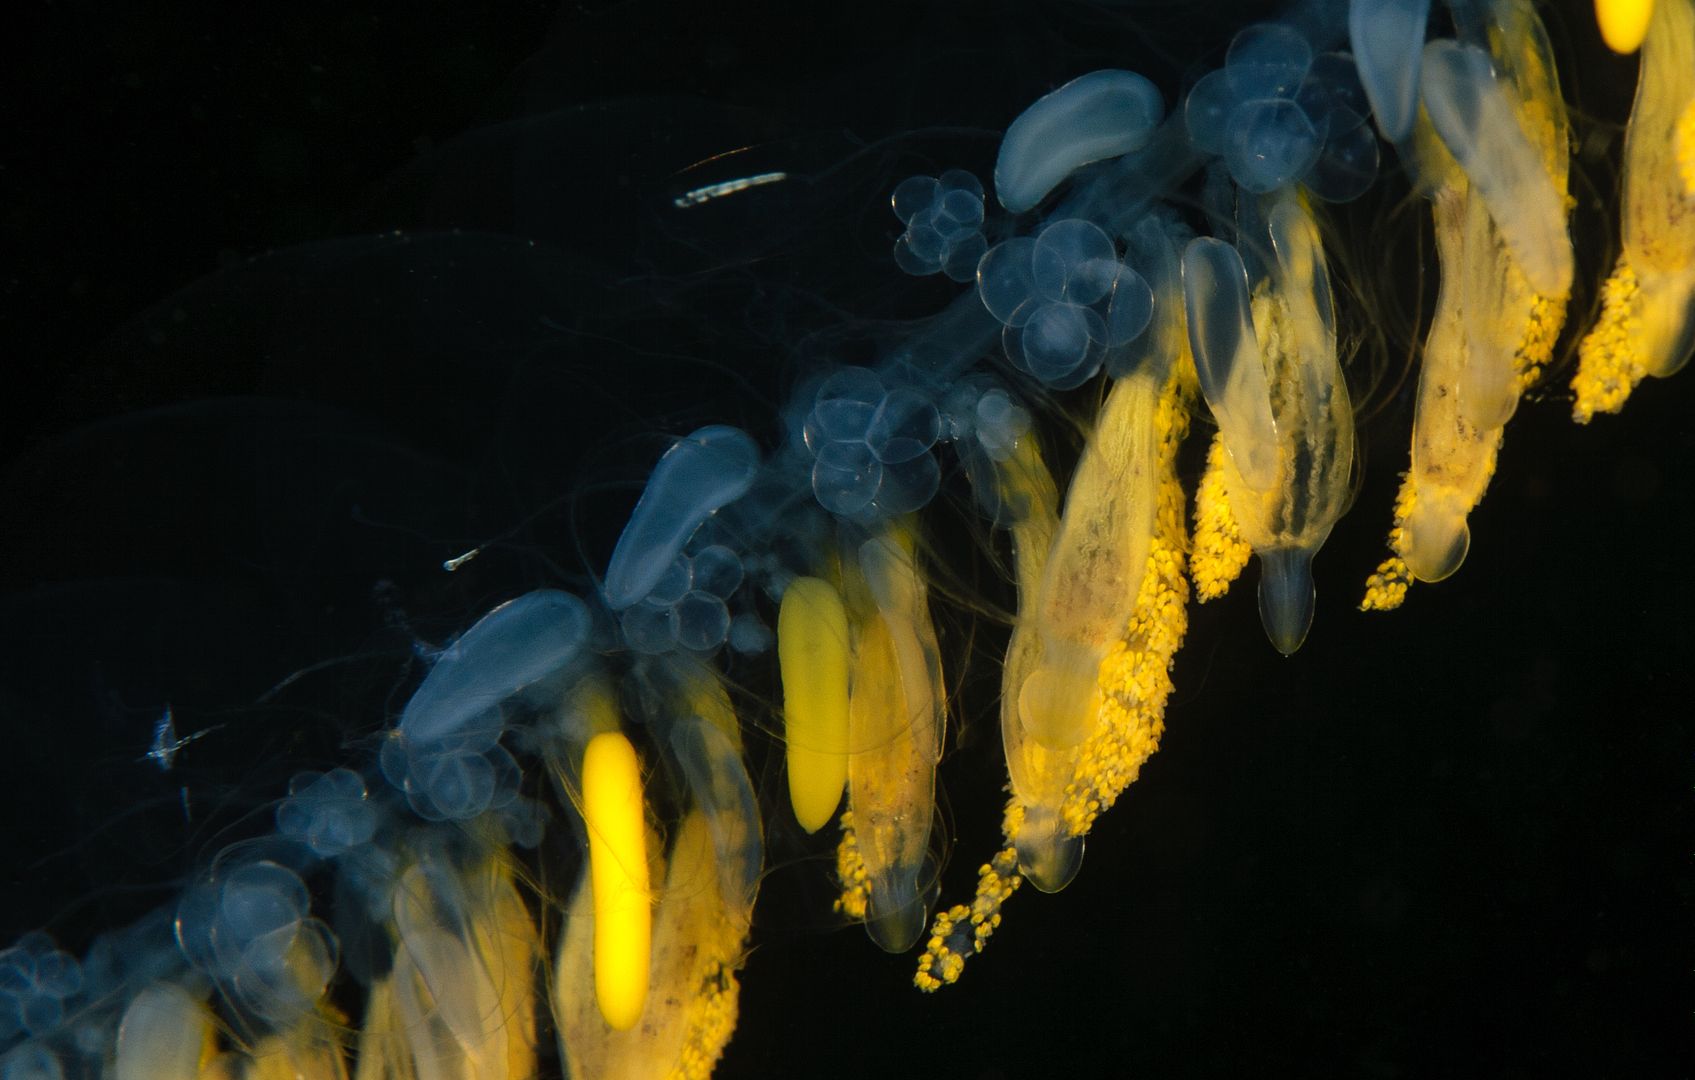  photo Halfway Reef Praya dubia Giant siphonophore_zpsnutuypsz.jpg